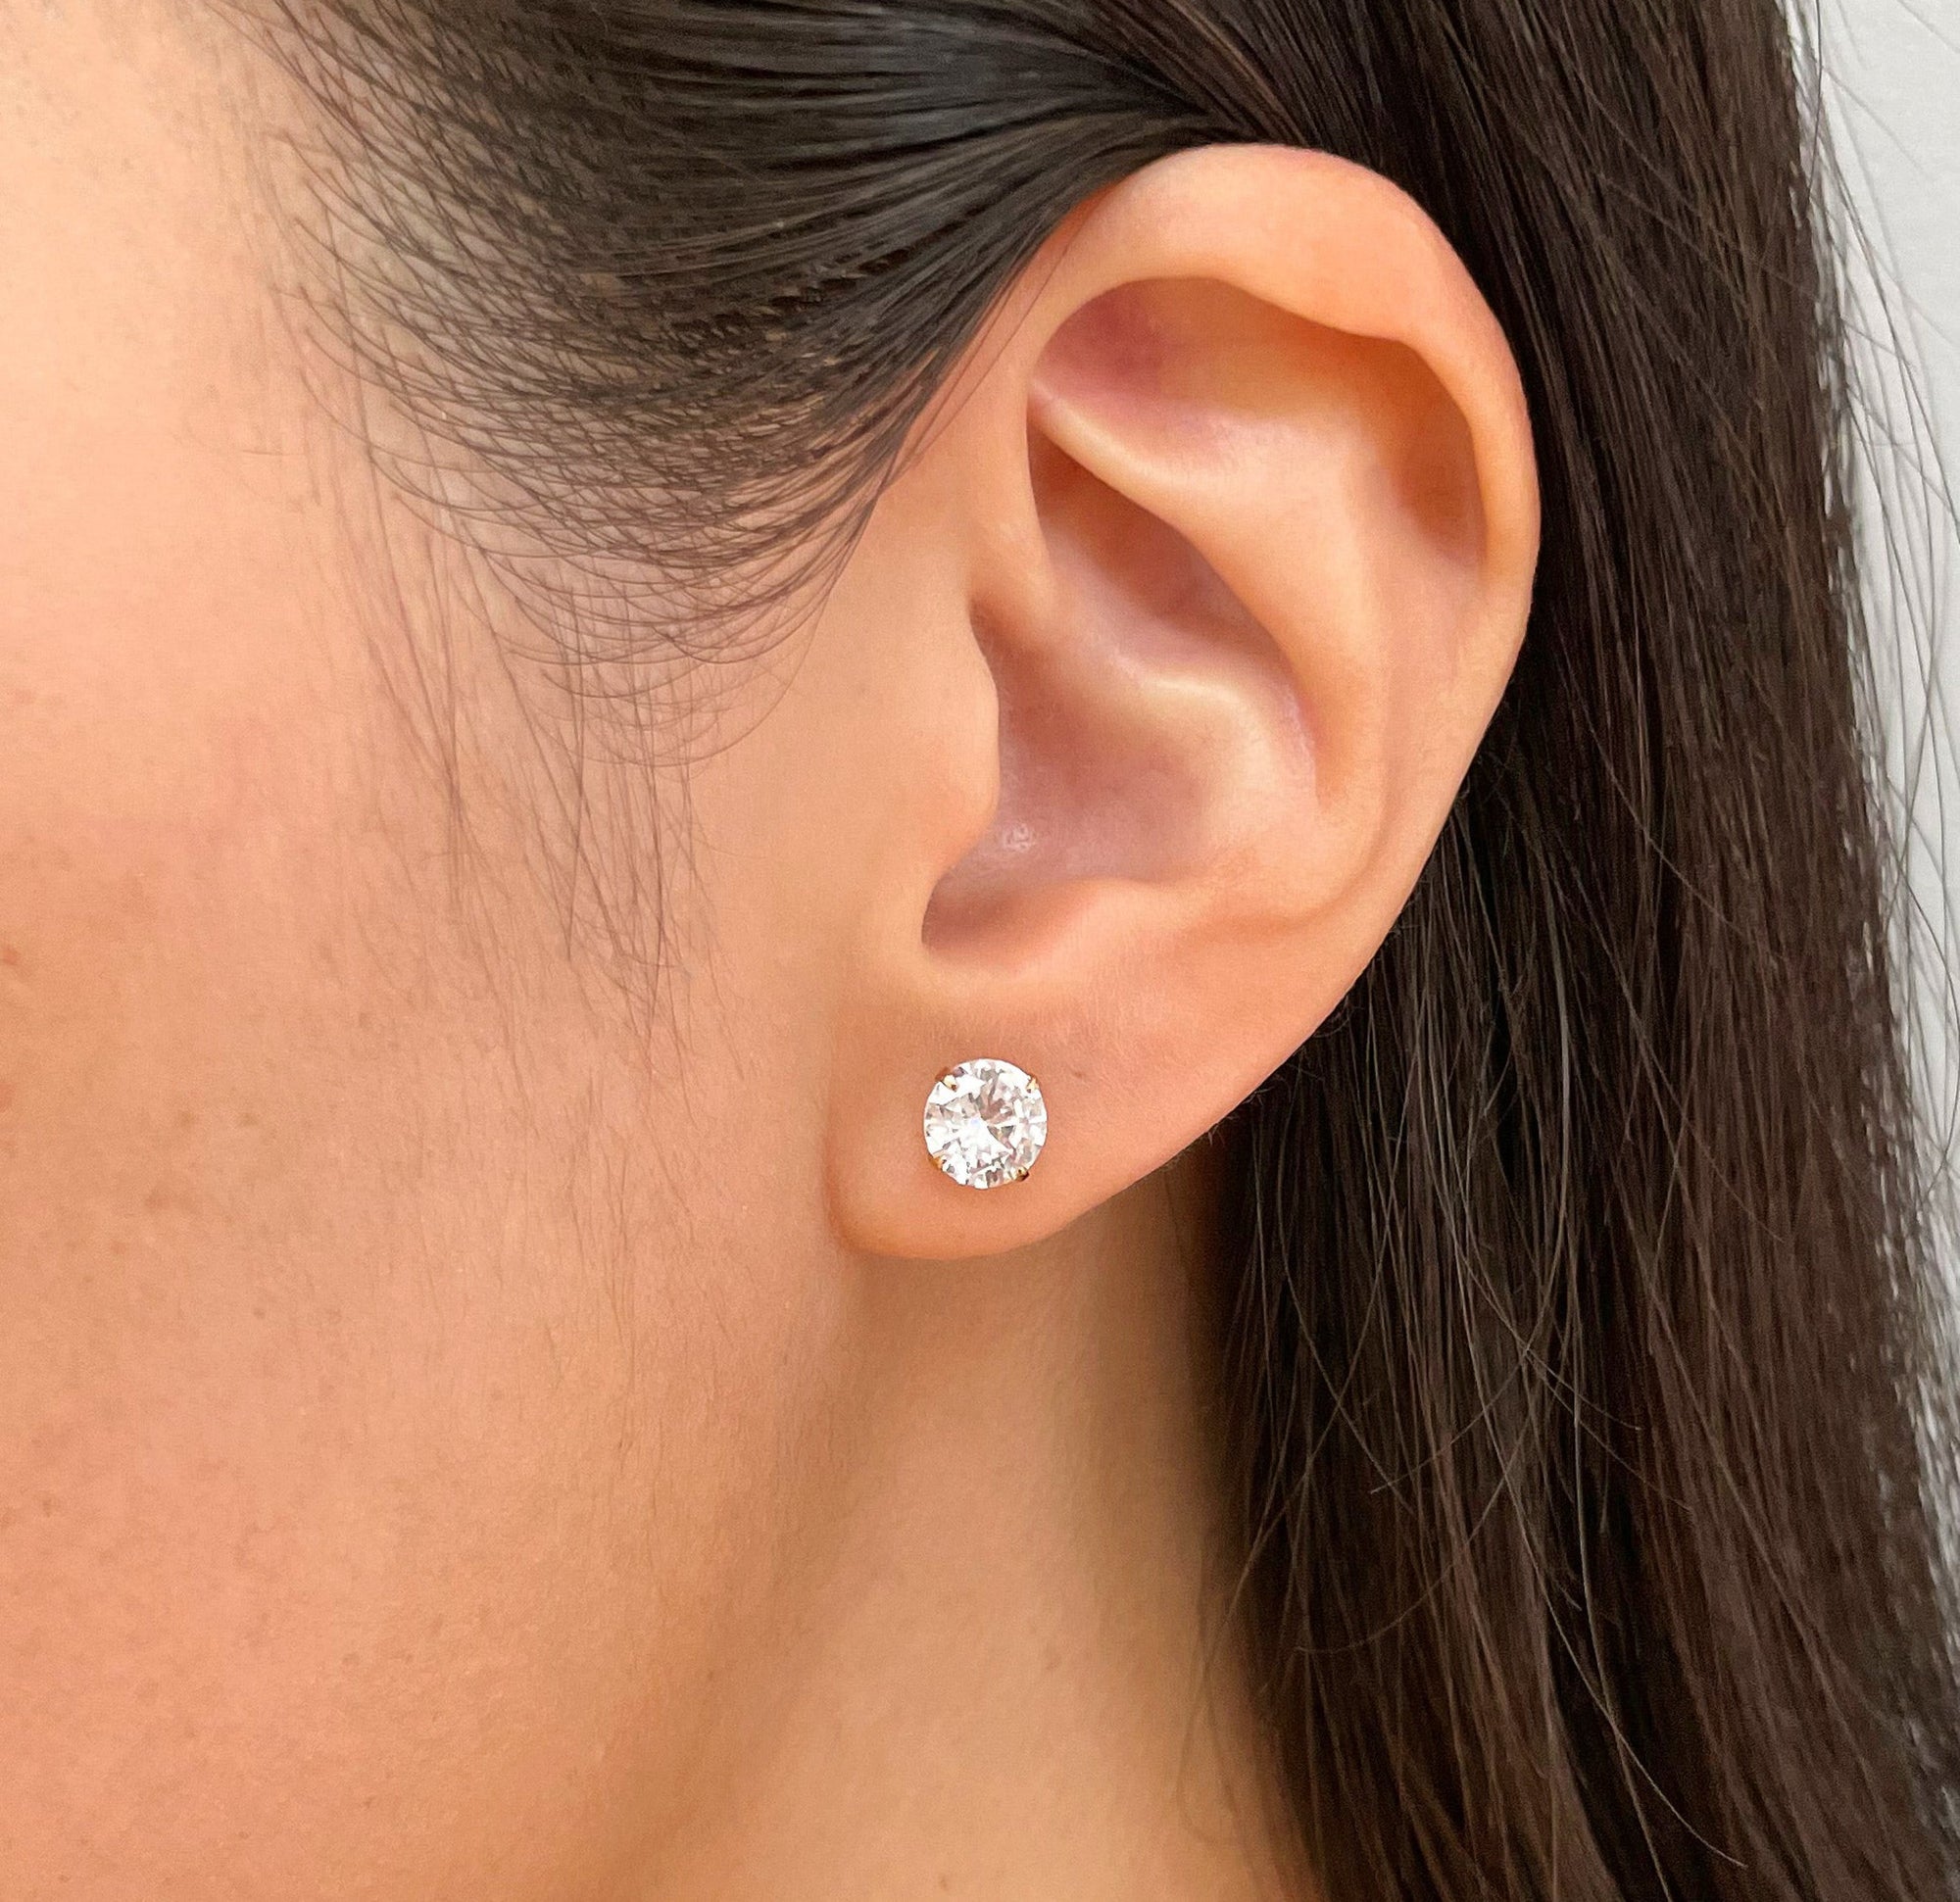 DIAMOND STUD EARRINGS HYPOALLERGENIC